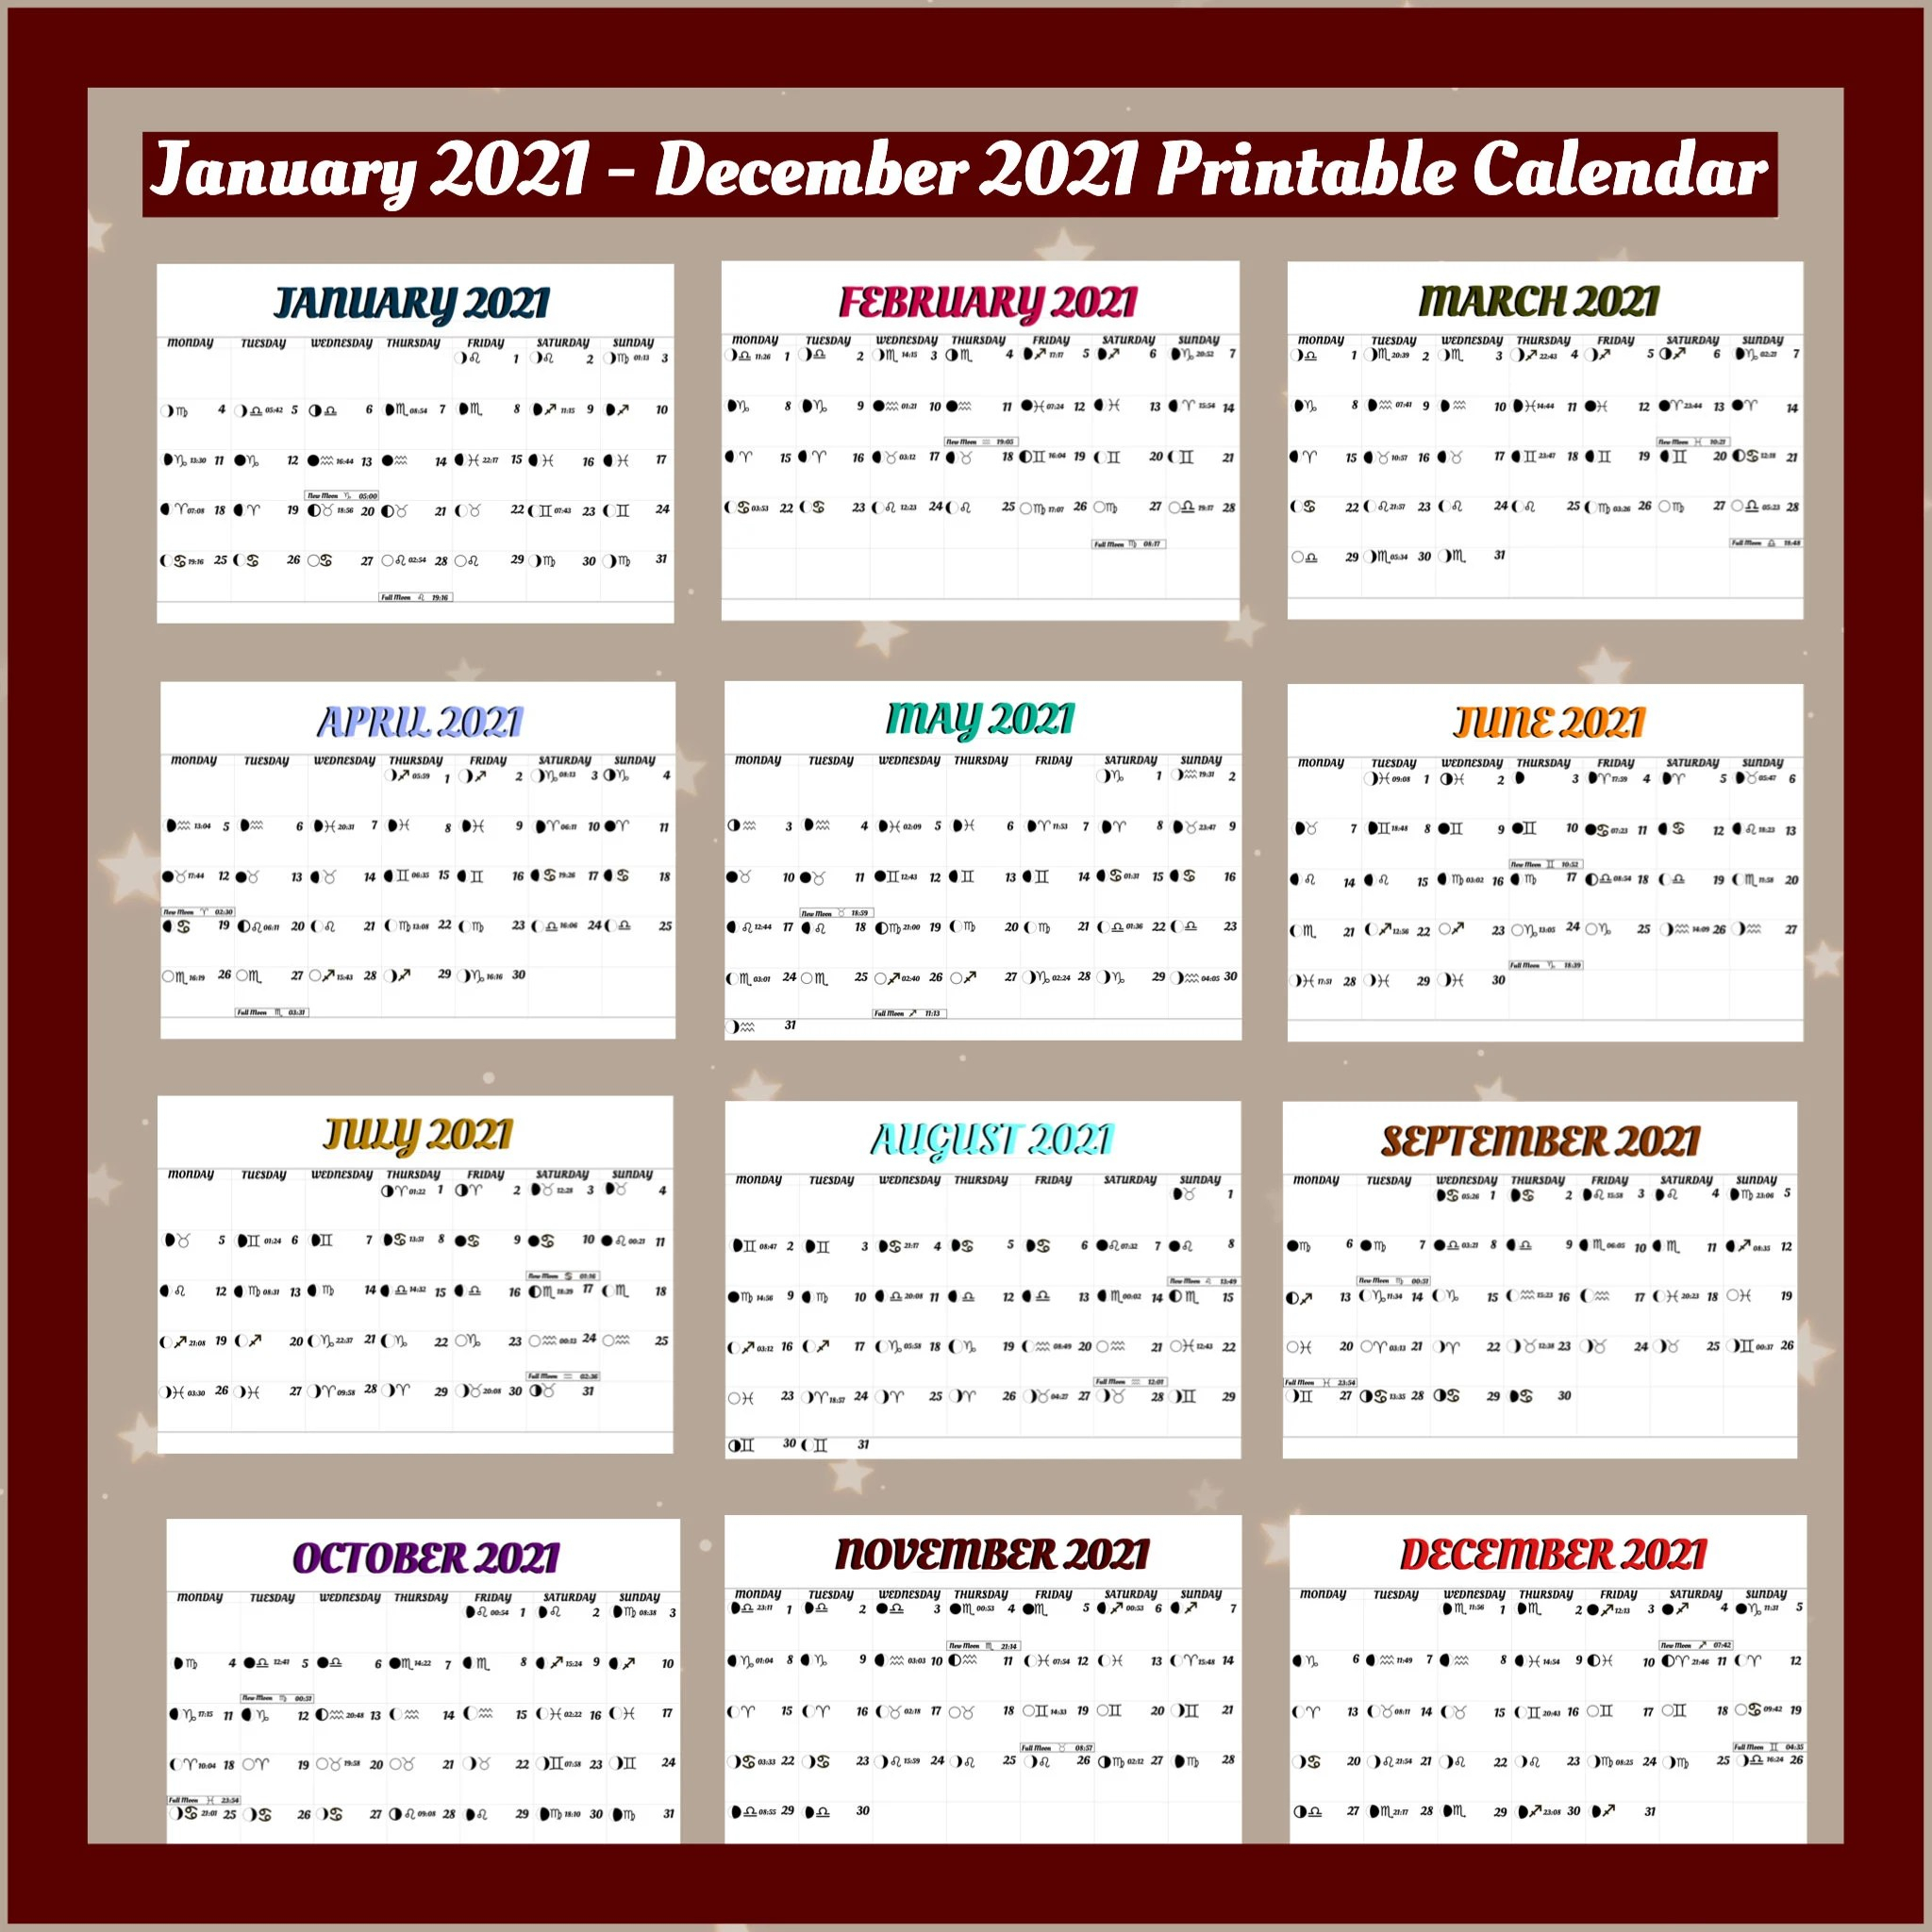 Lunar Calendar 2022 Free Printable  Latest News Update for Free Lunar Calendar 2022 Printable